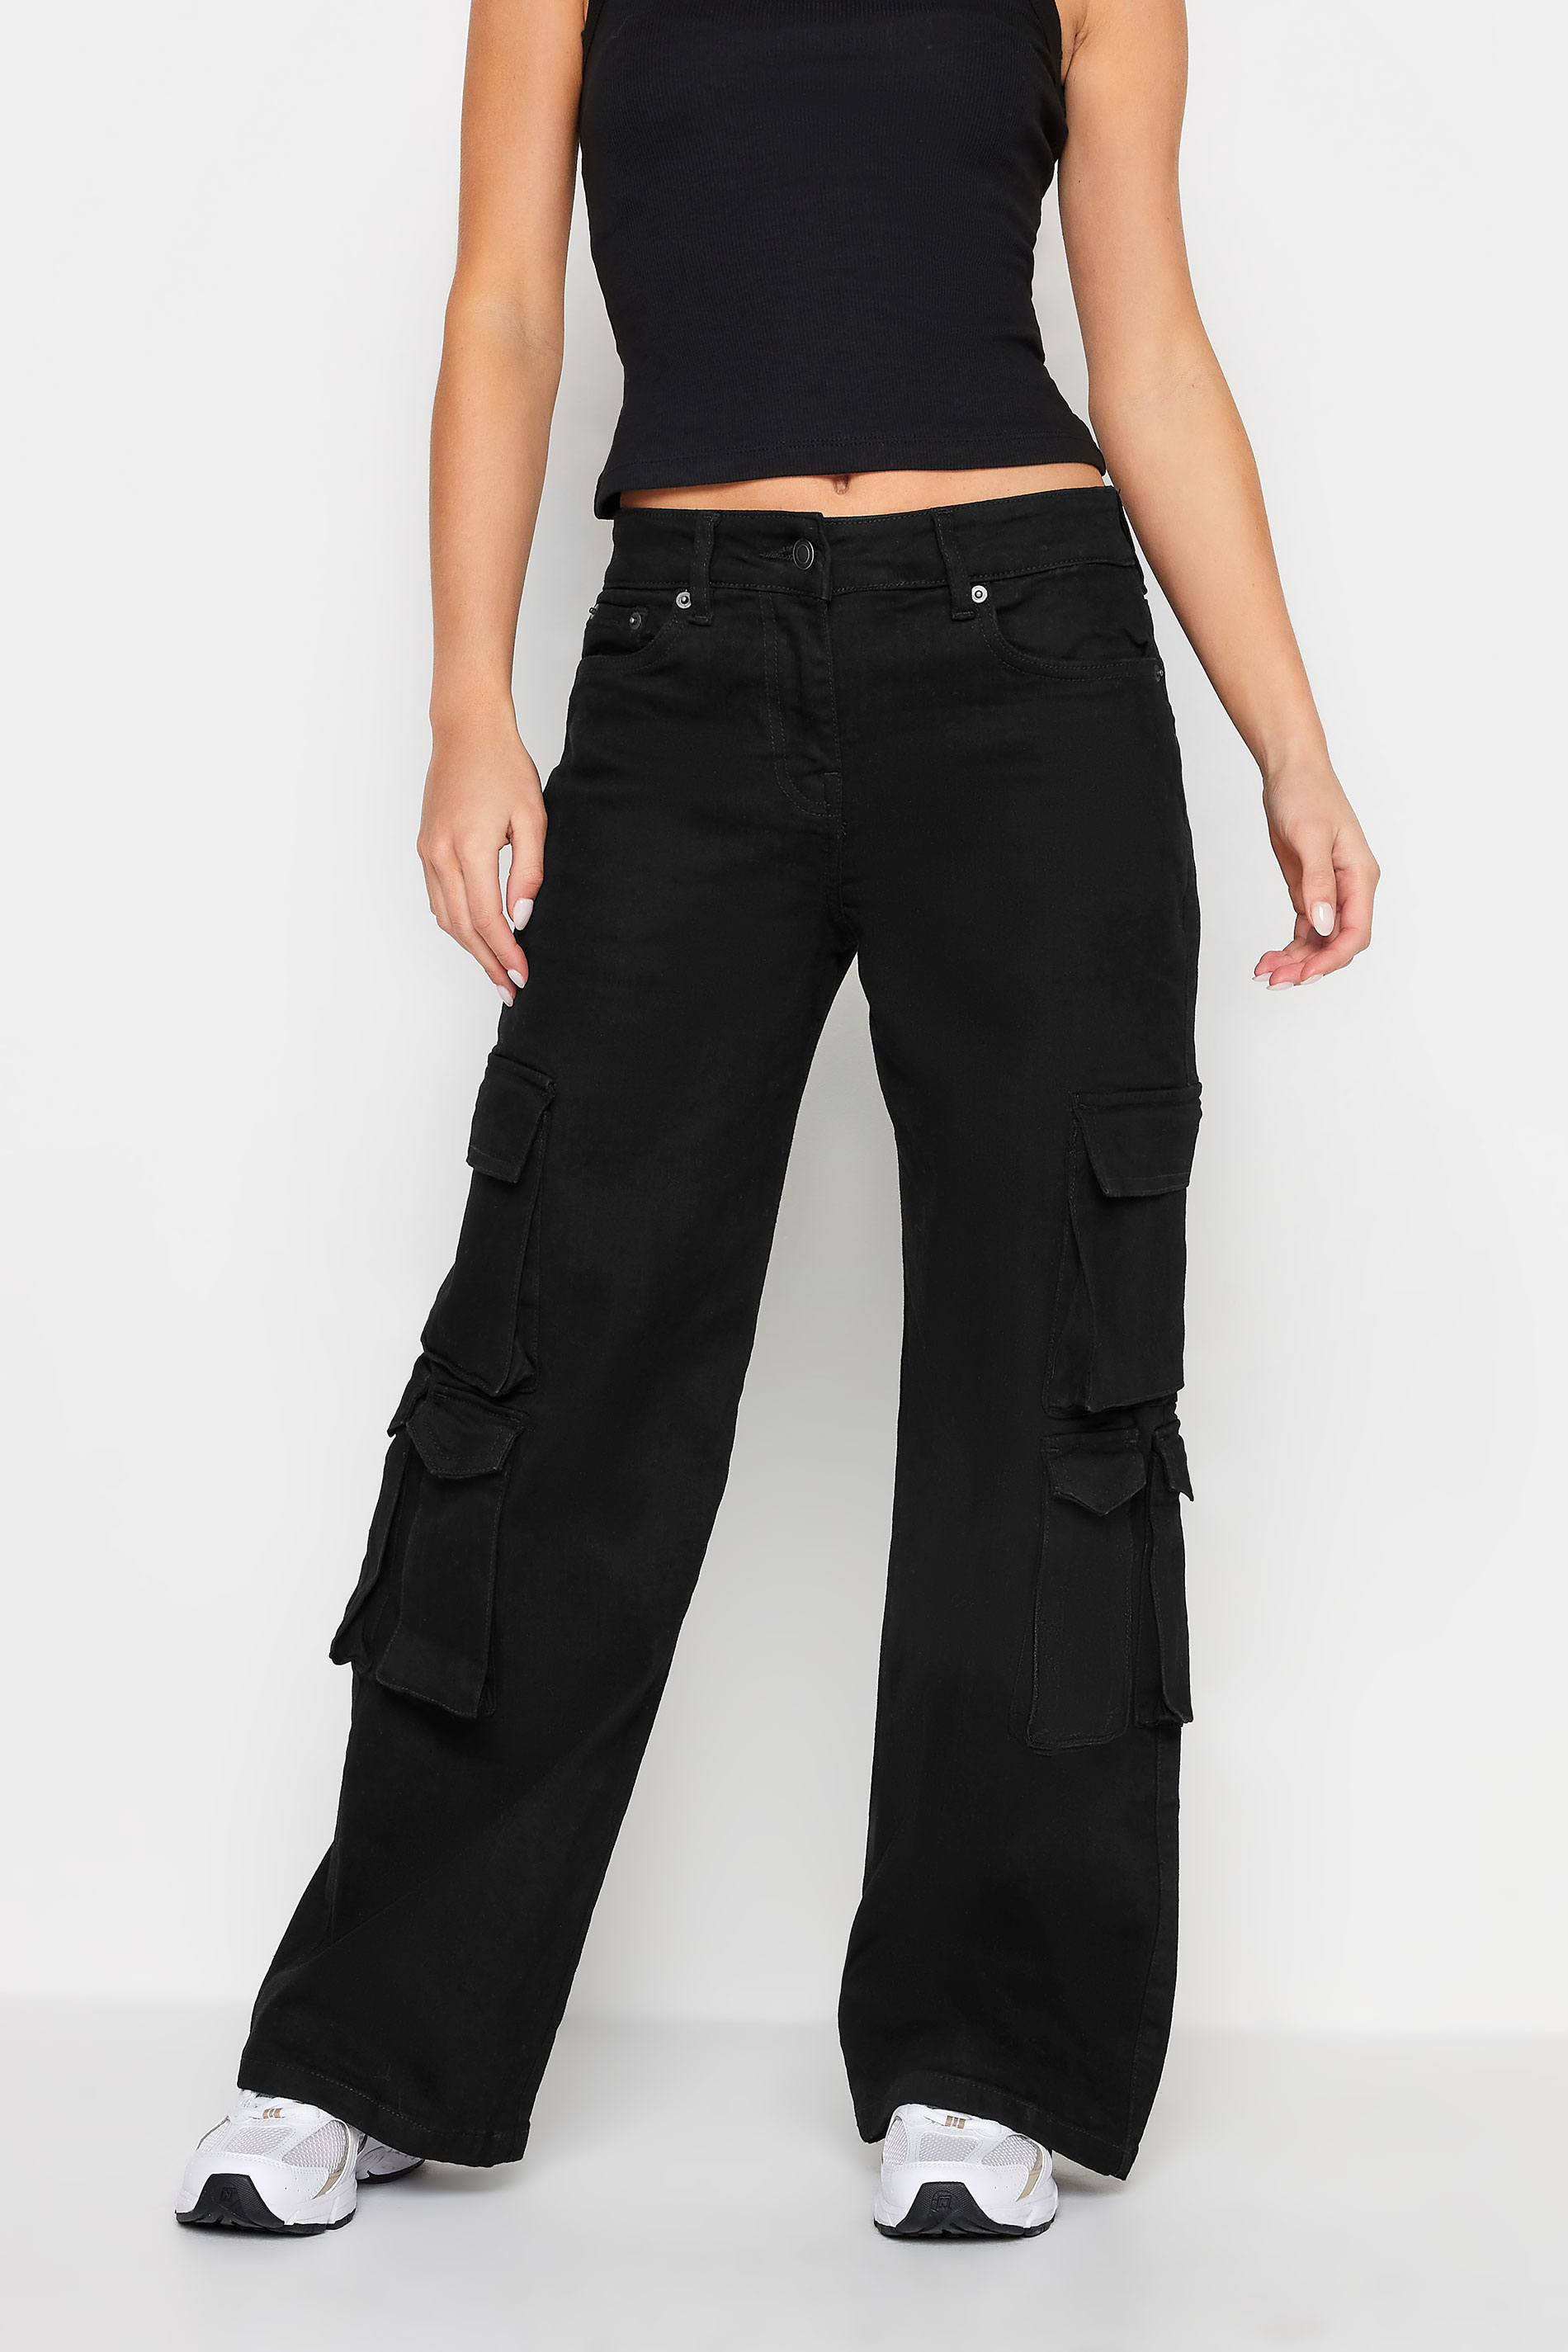 PixieGirl Black Multi Pocket Wide leg Cargo Trousers | PixieGirl